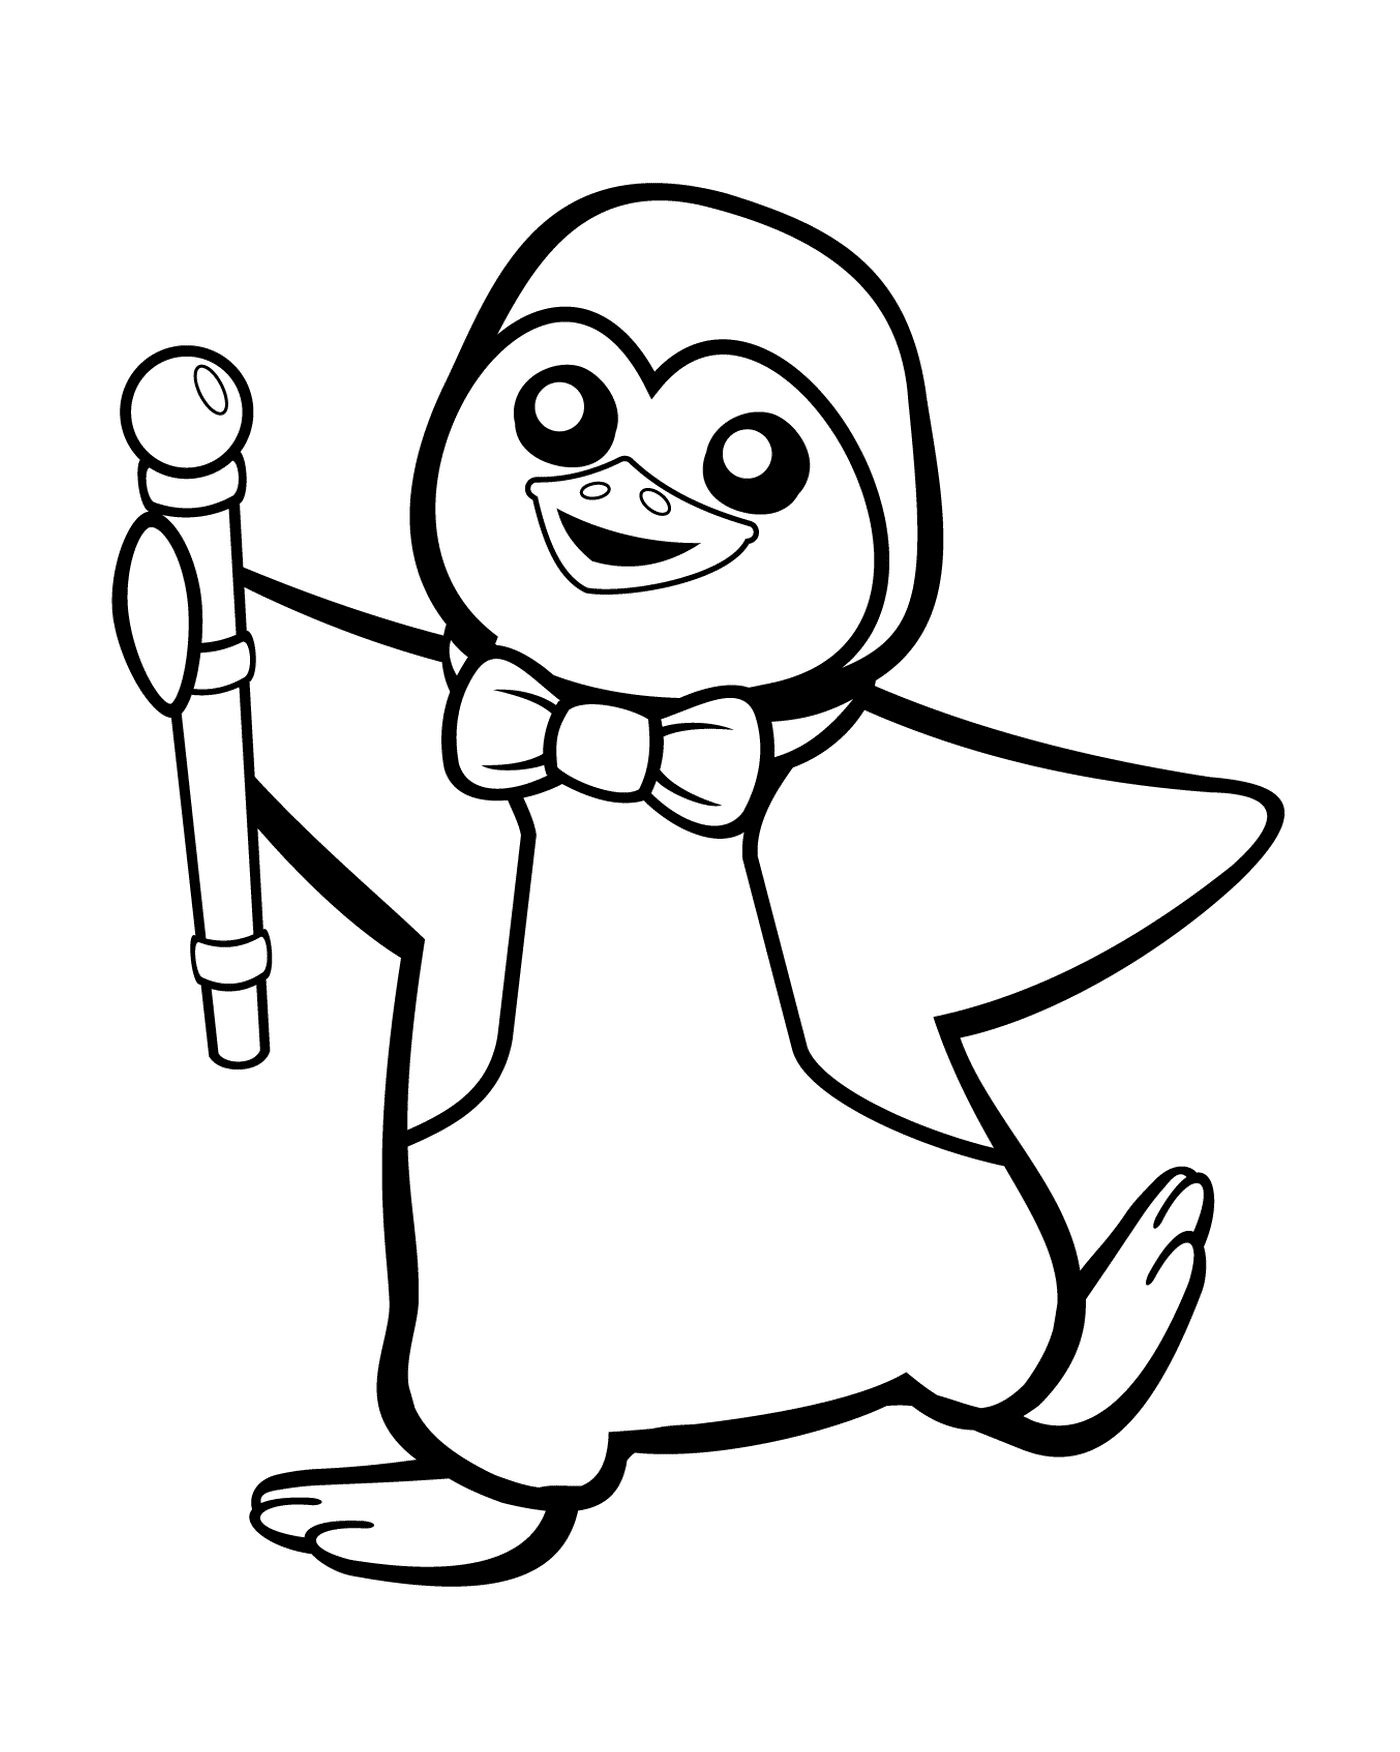  Un pingüino sosteniendo un bastón 